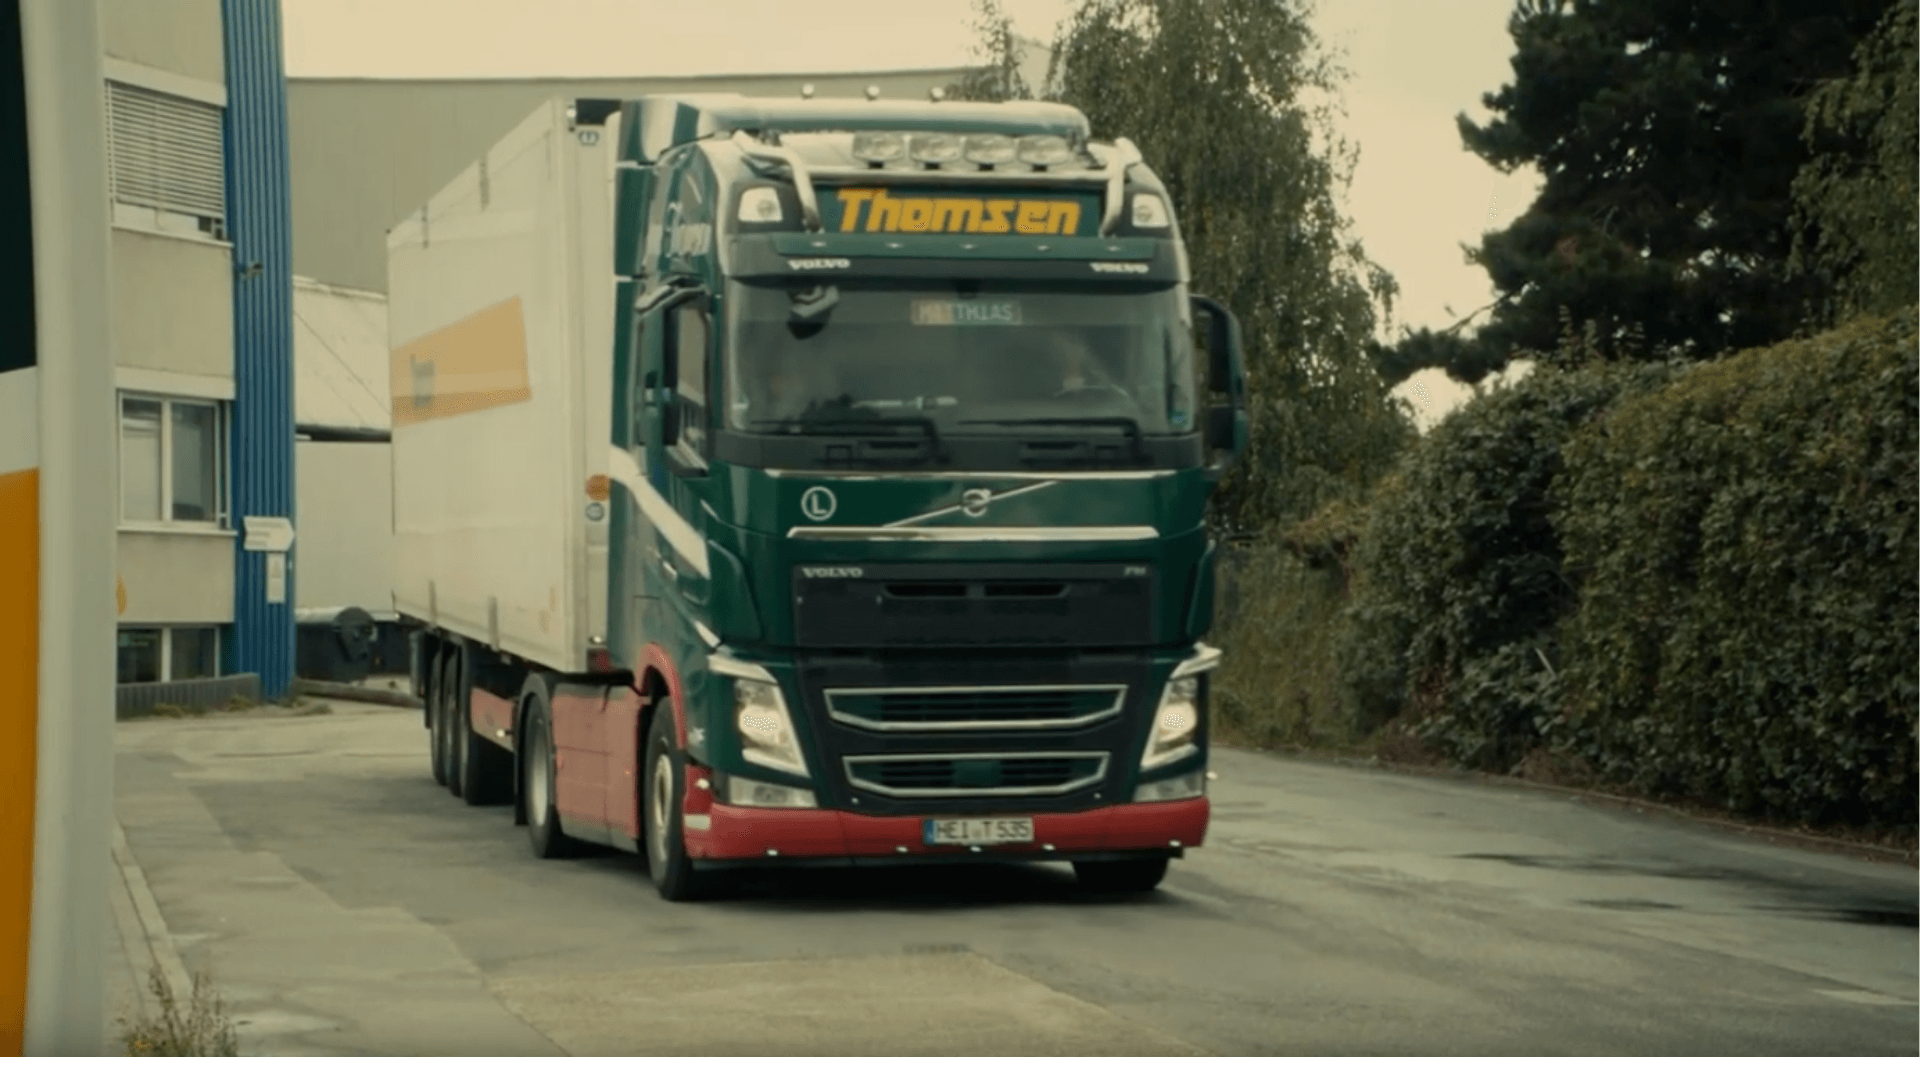 Jens Thomsen Transporte